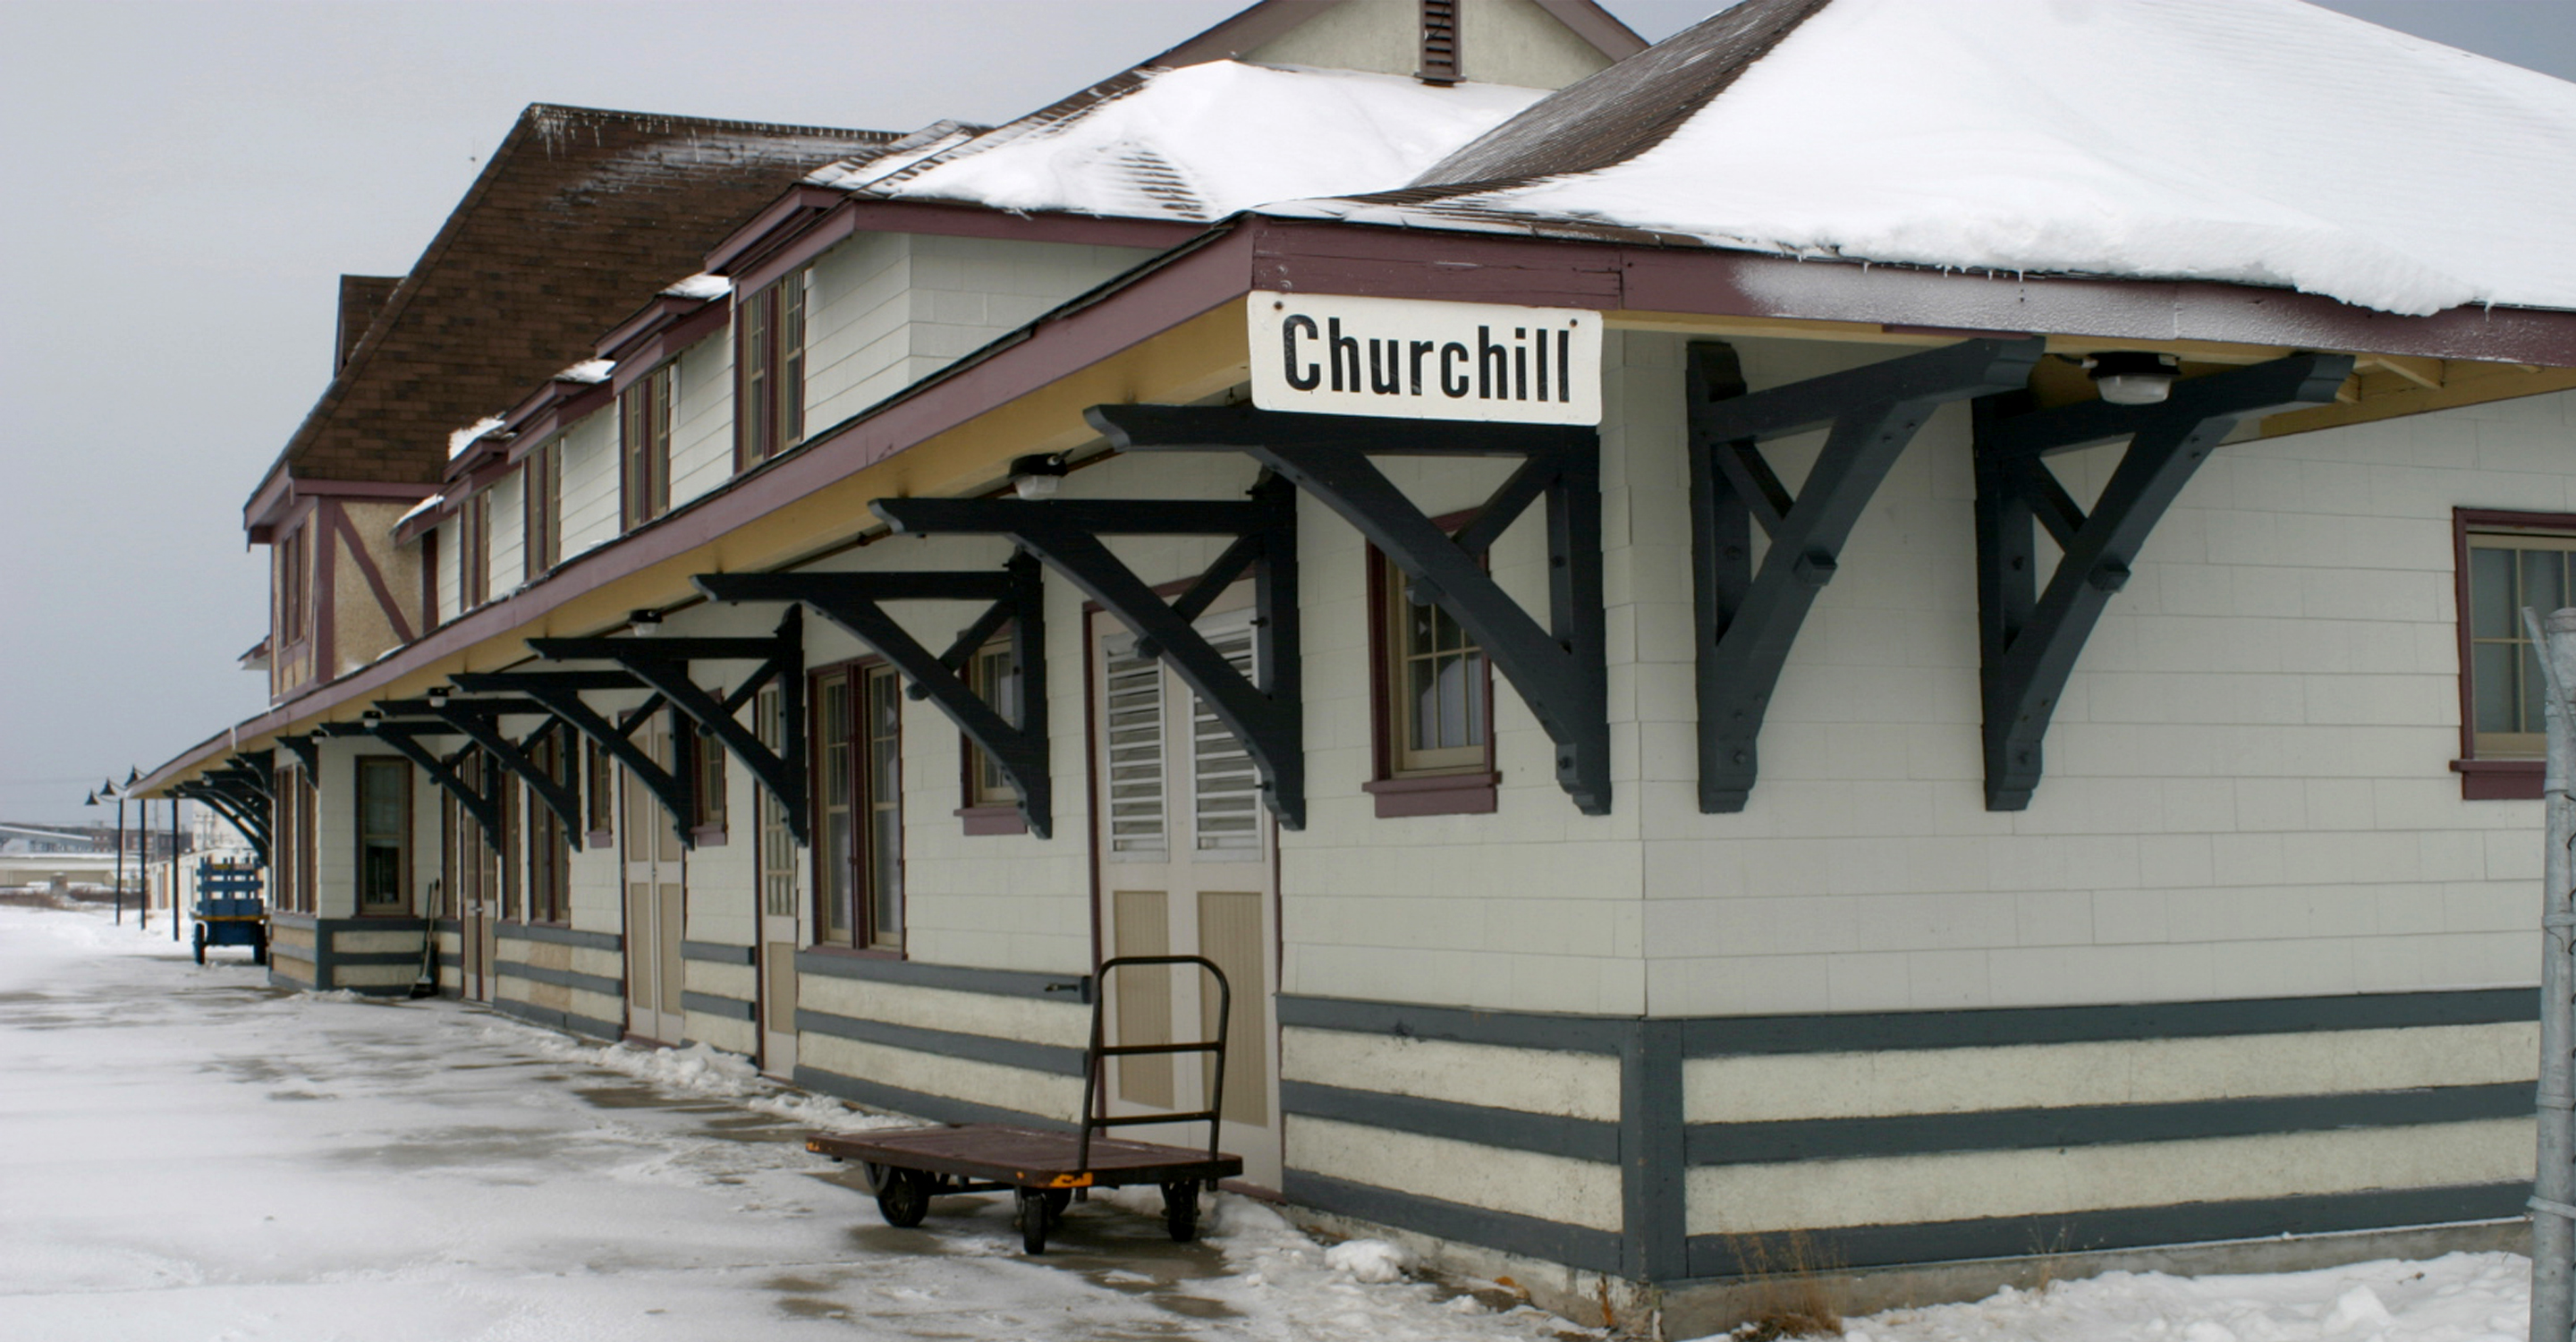 The Churchill train station, Manitoba, Canada